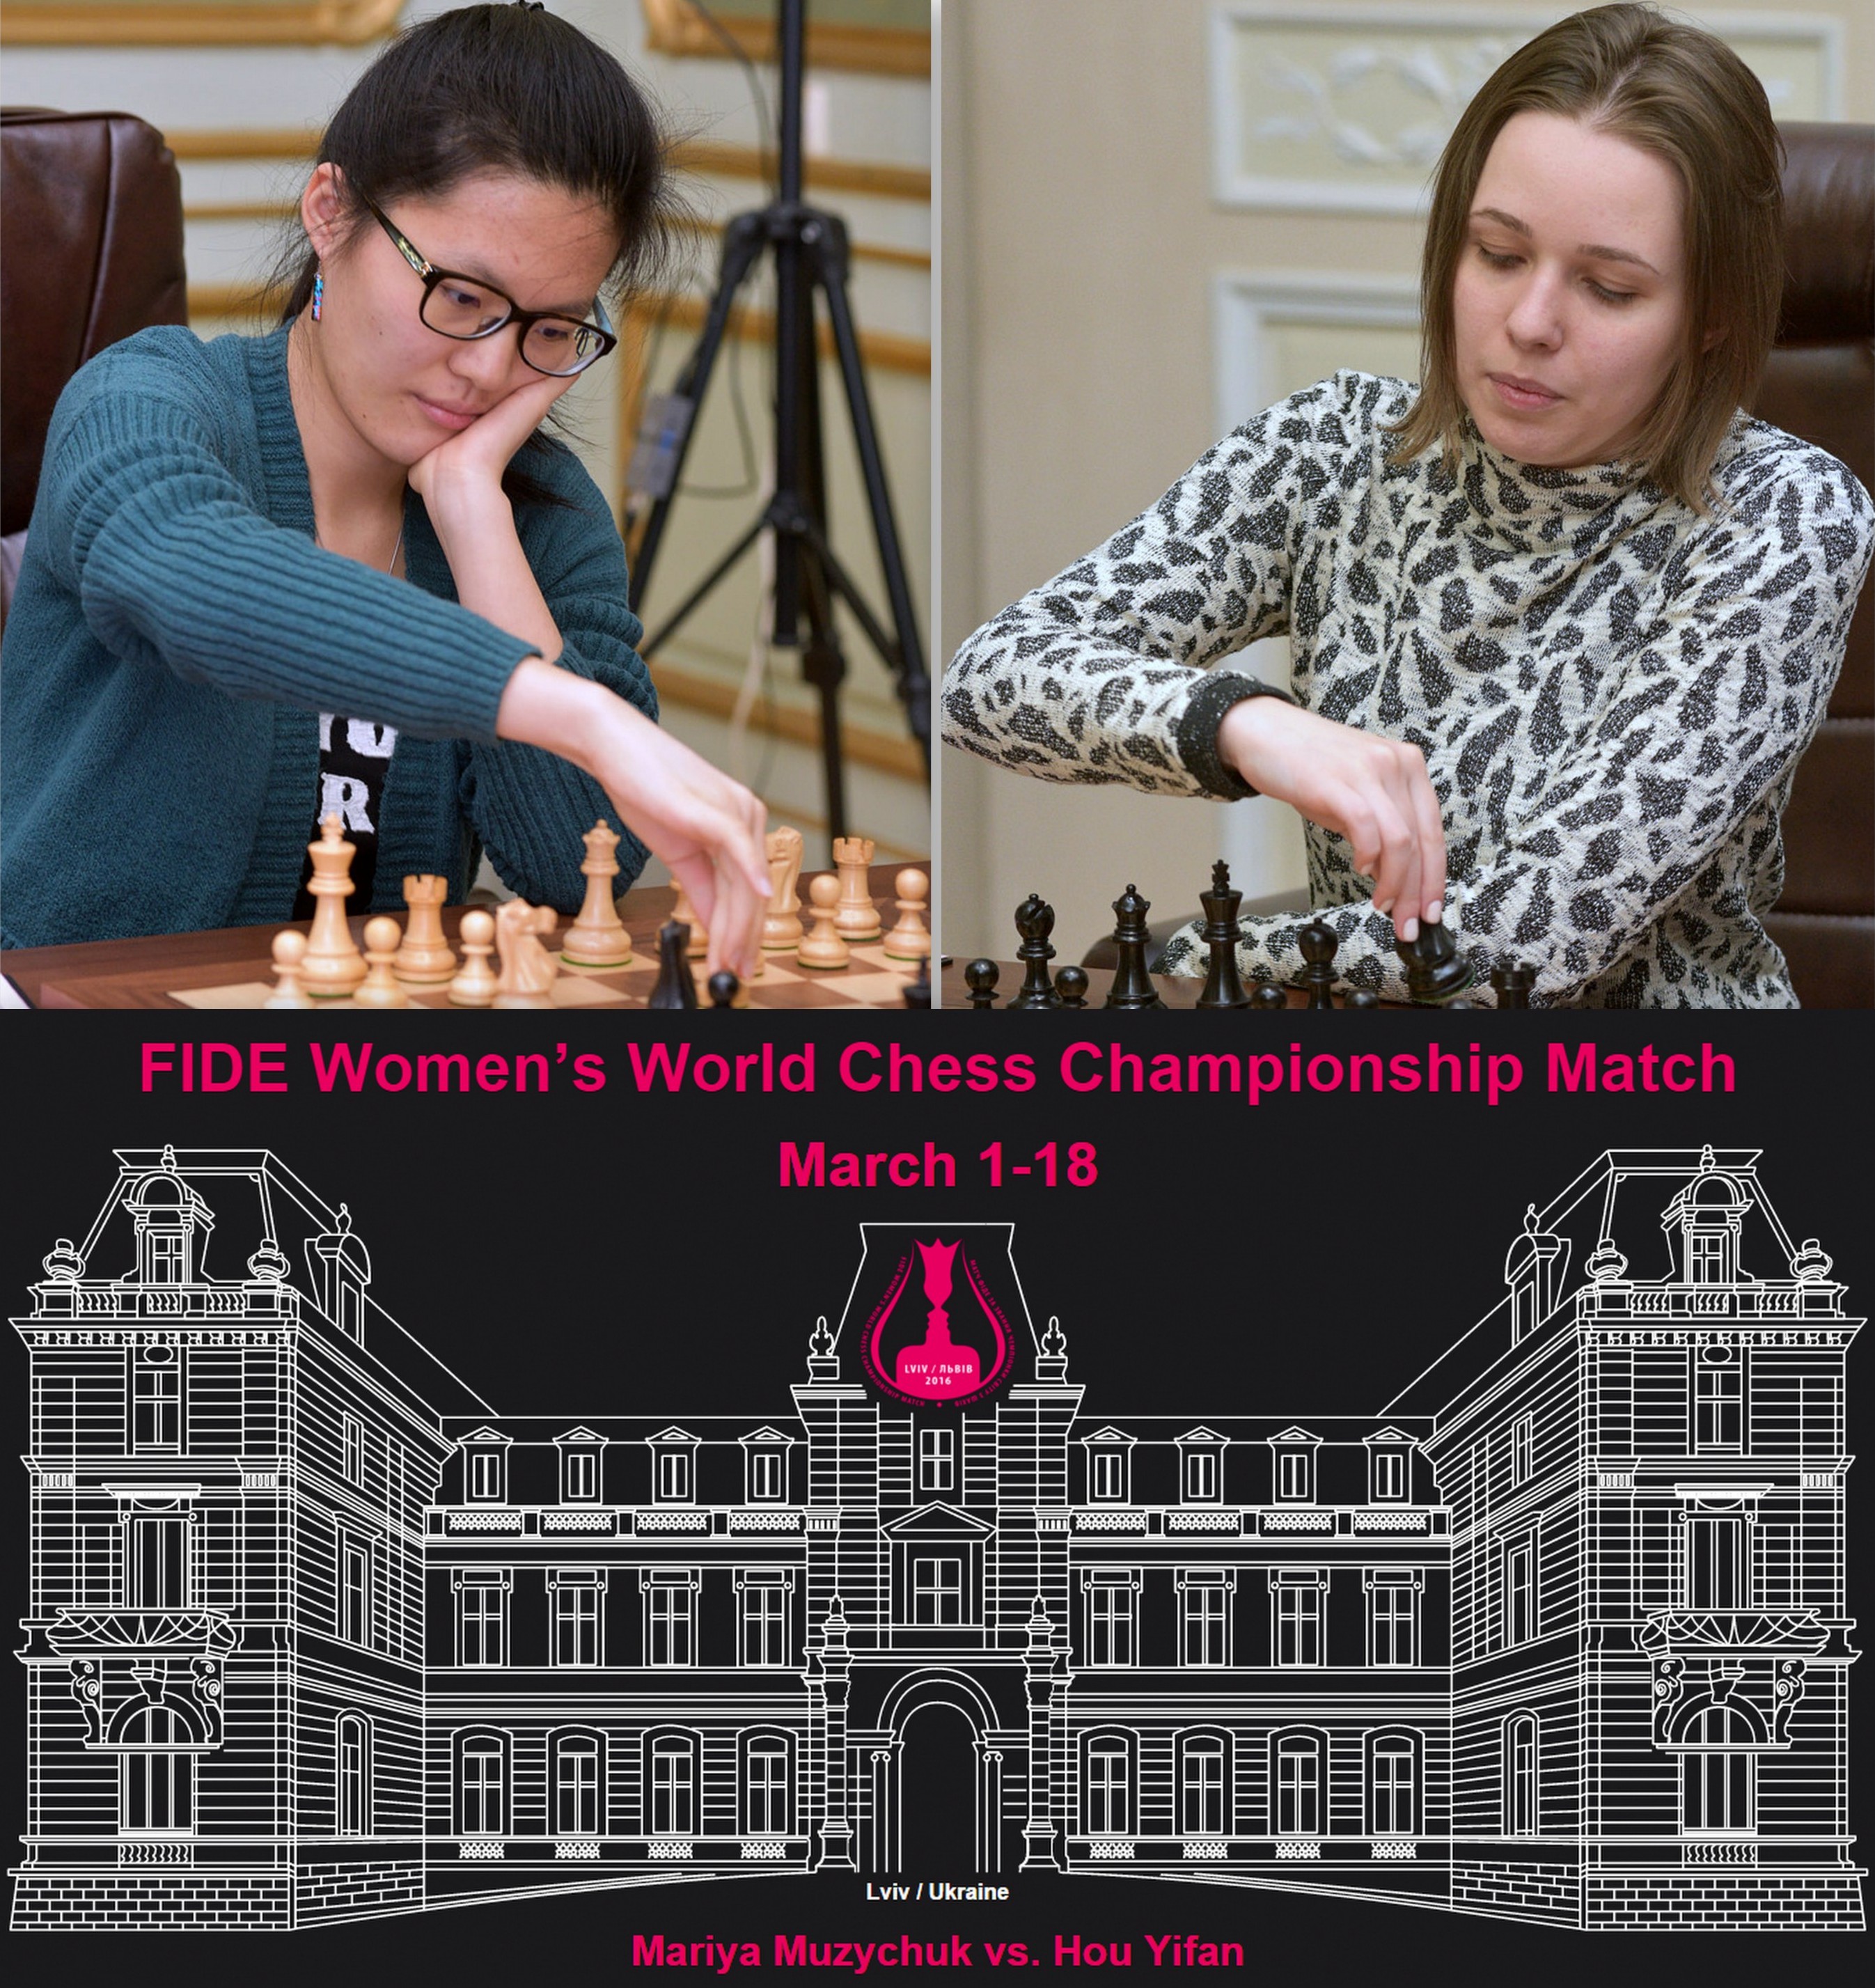 FIDE World Chess Championship Game 4